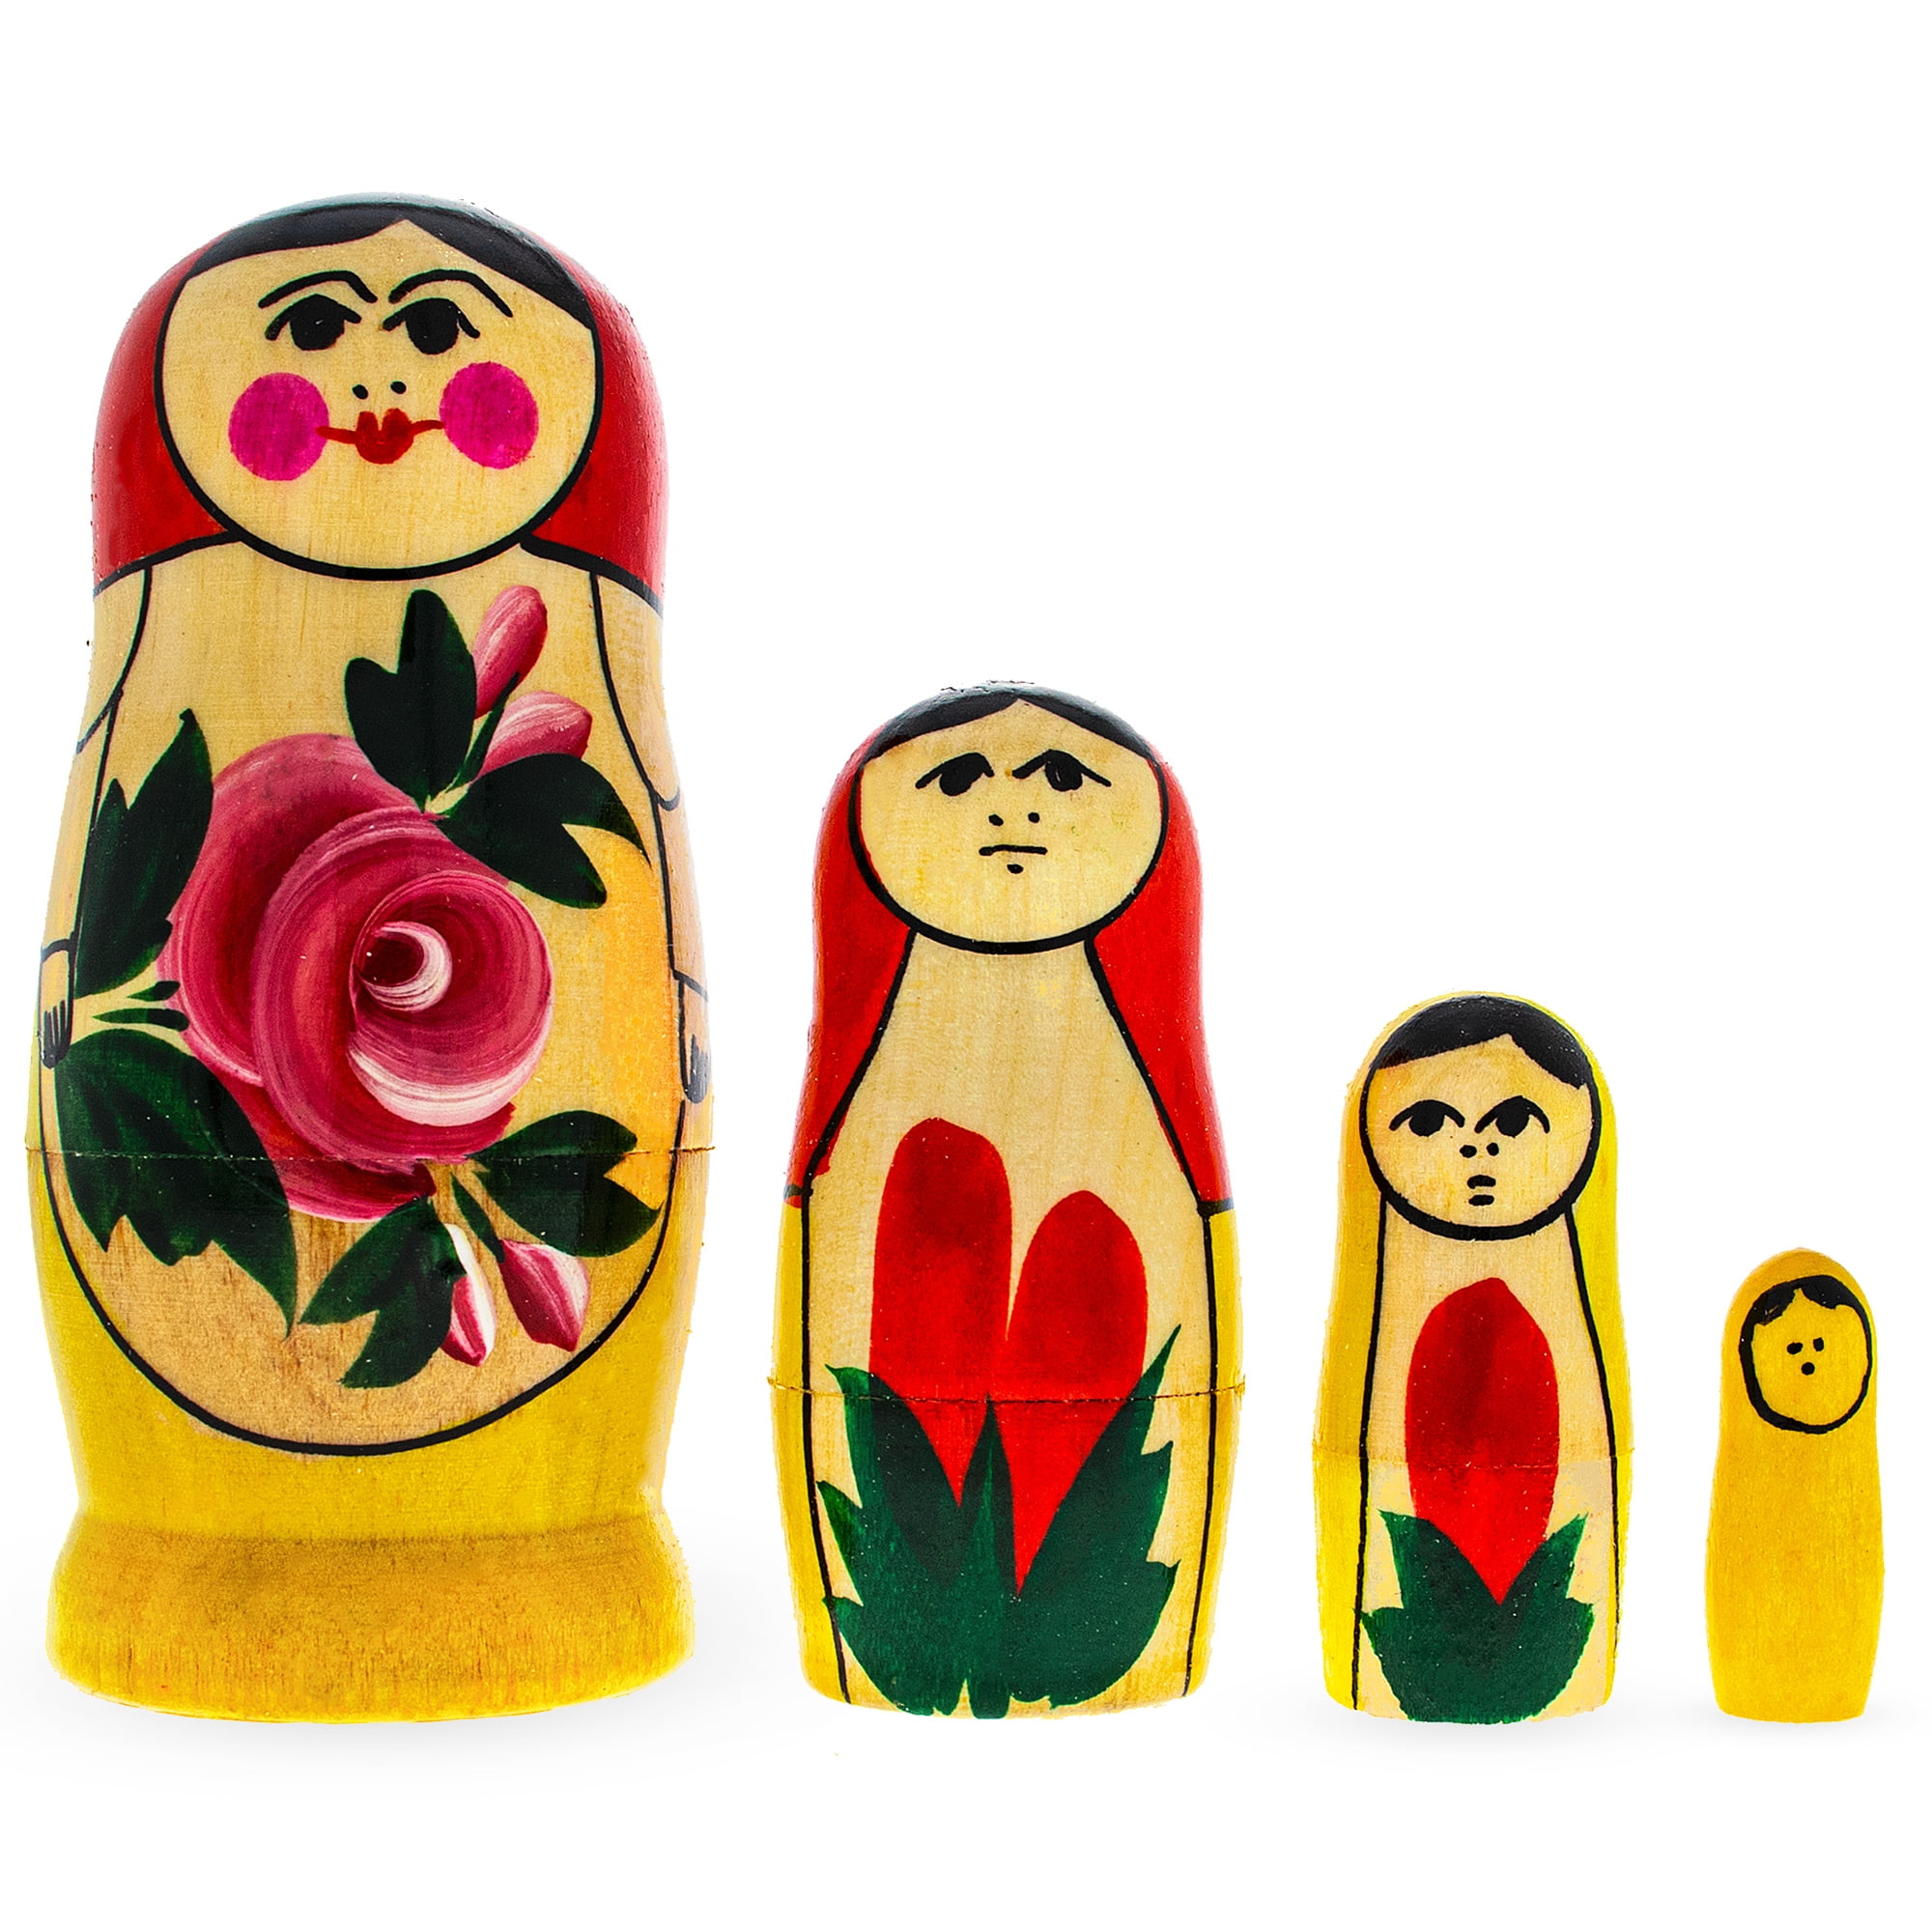 3 Miniature Traditional Wooden Matryoshka Russian Nesting Dolls 3 Inches 